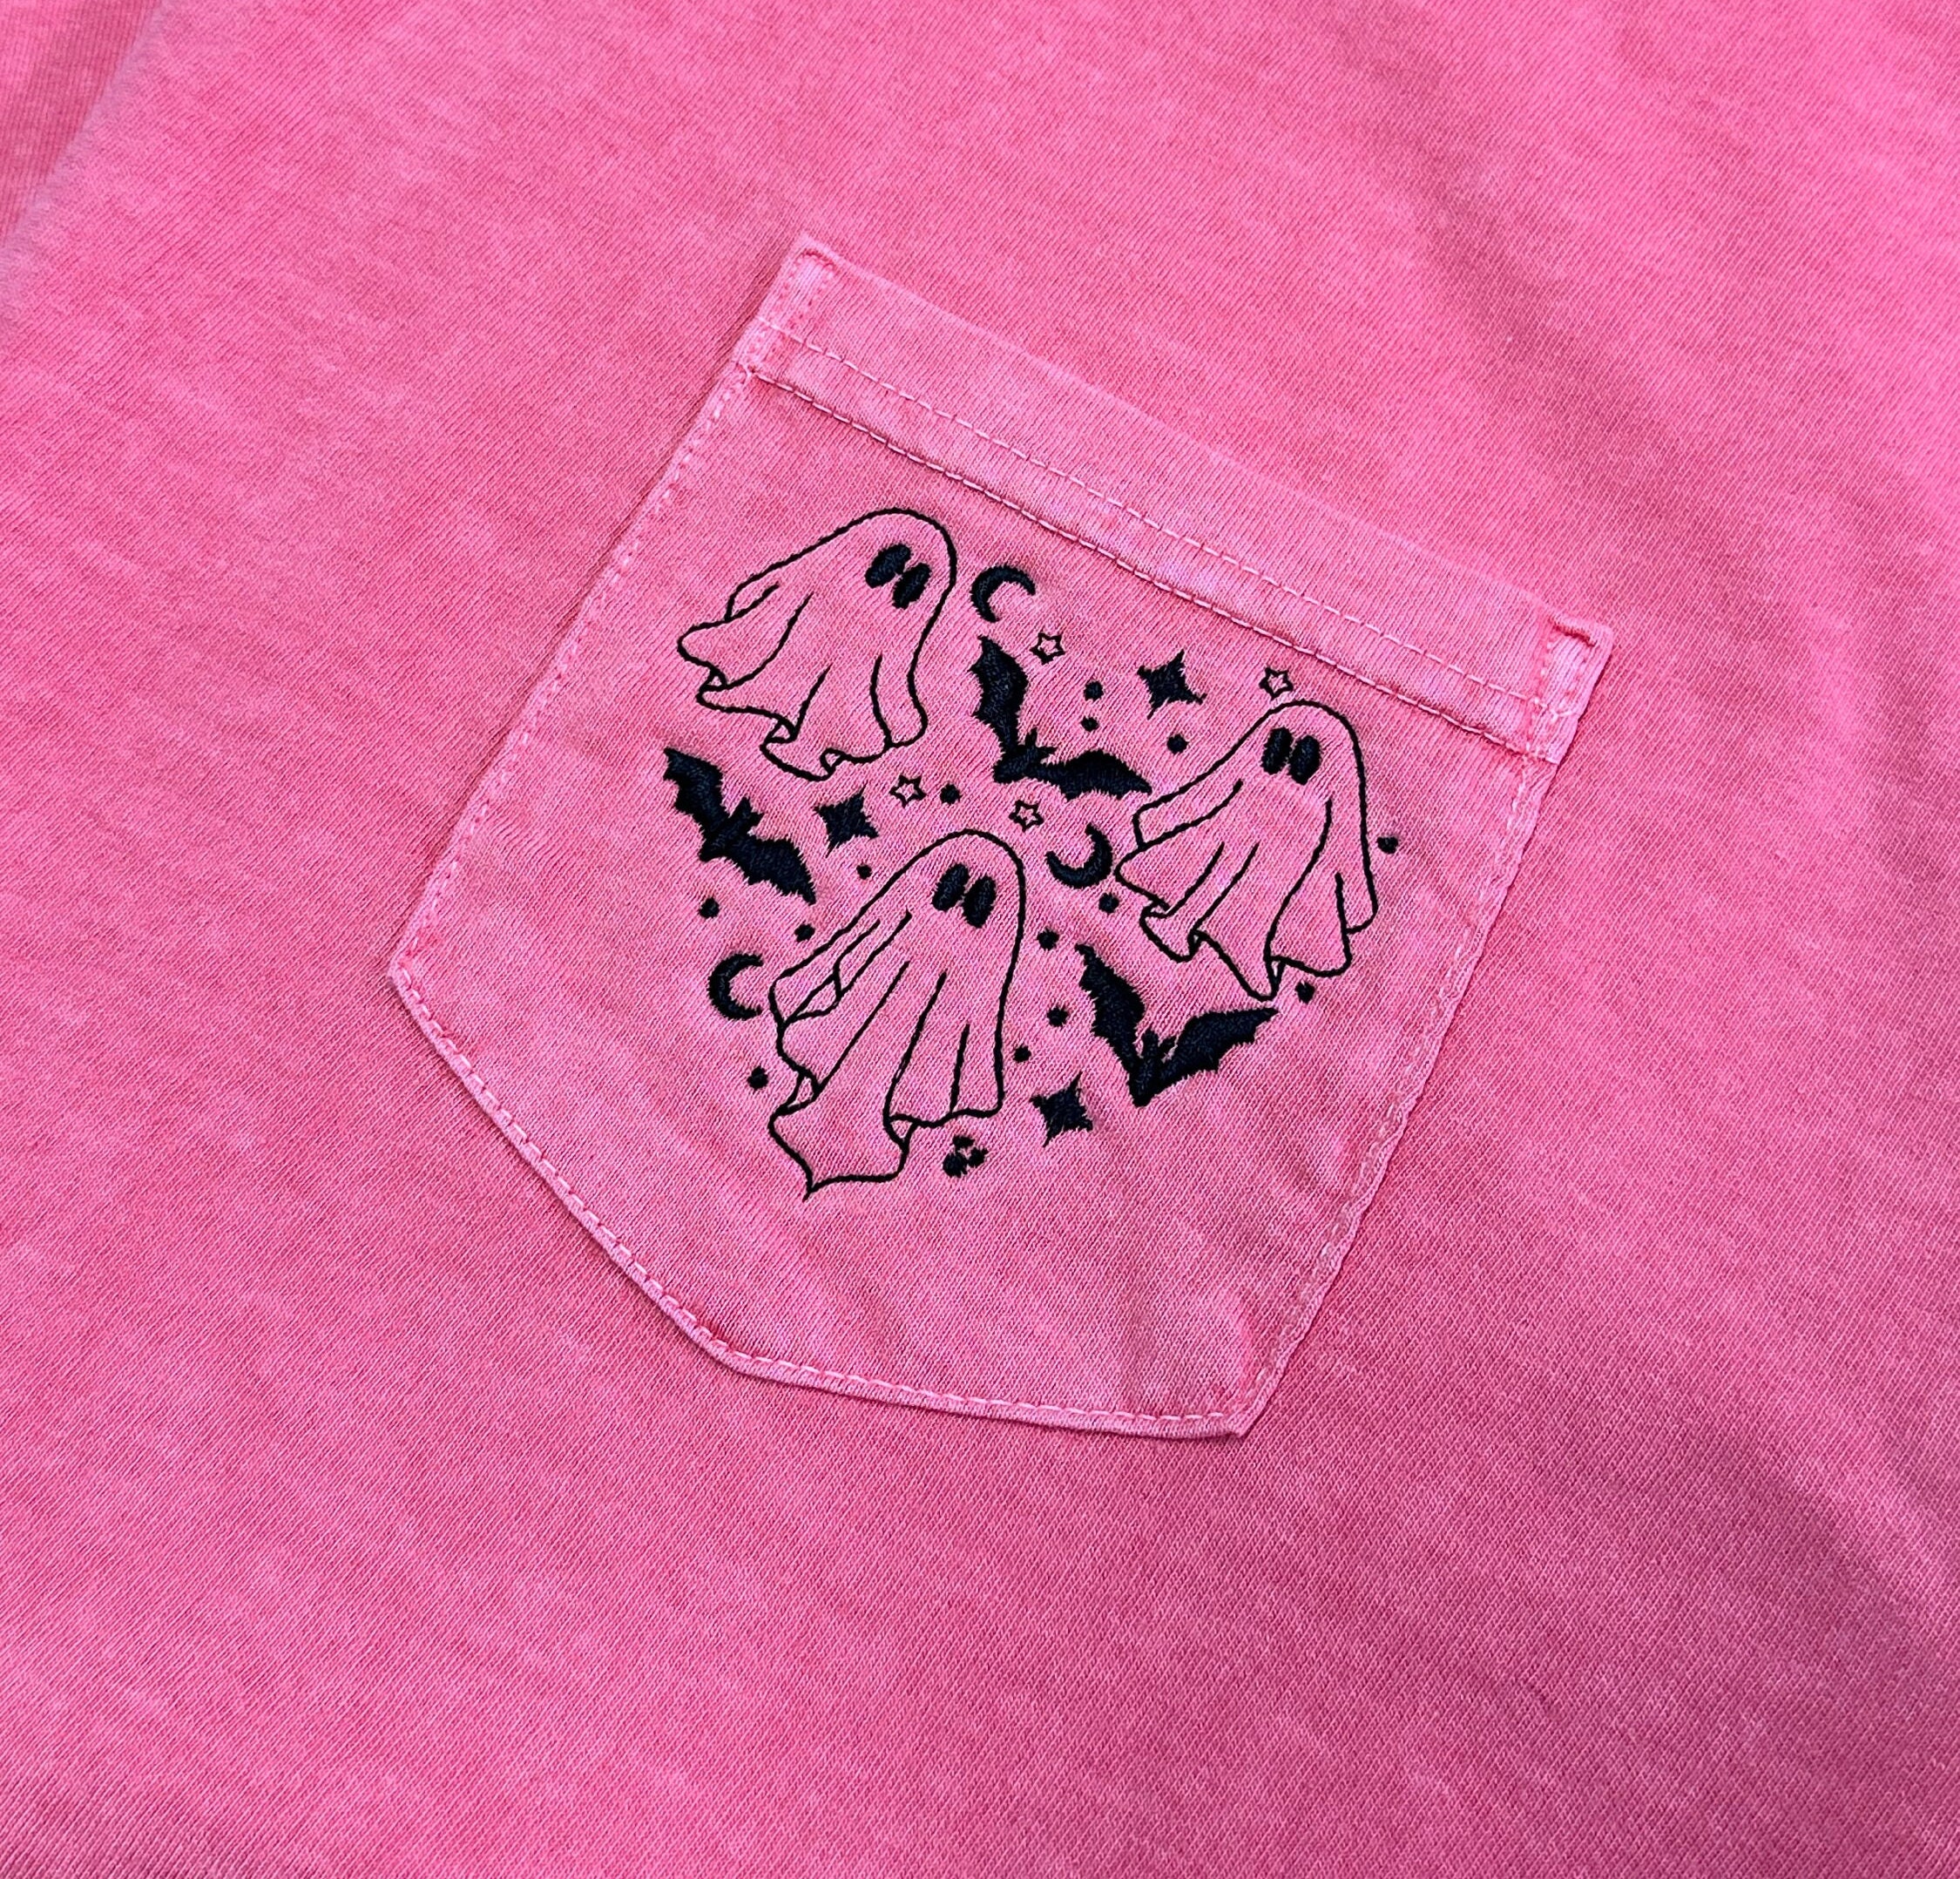 CLC Valley Forge Pocket T-Shirt (Embroidered Logo Above Pocket)